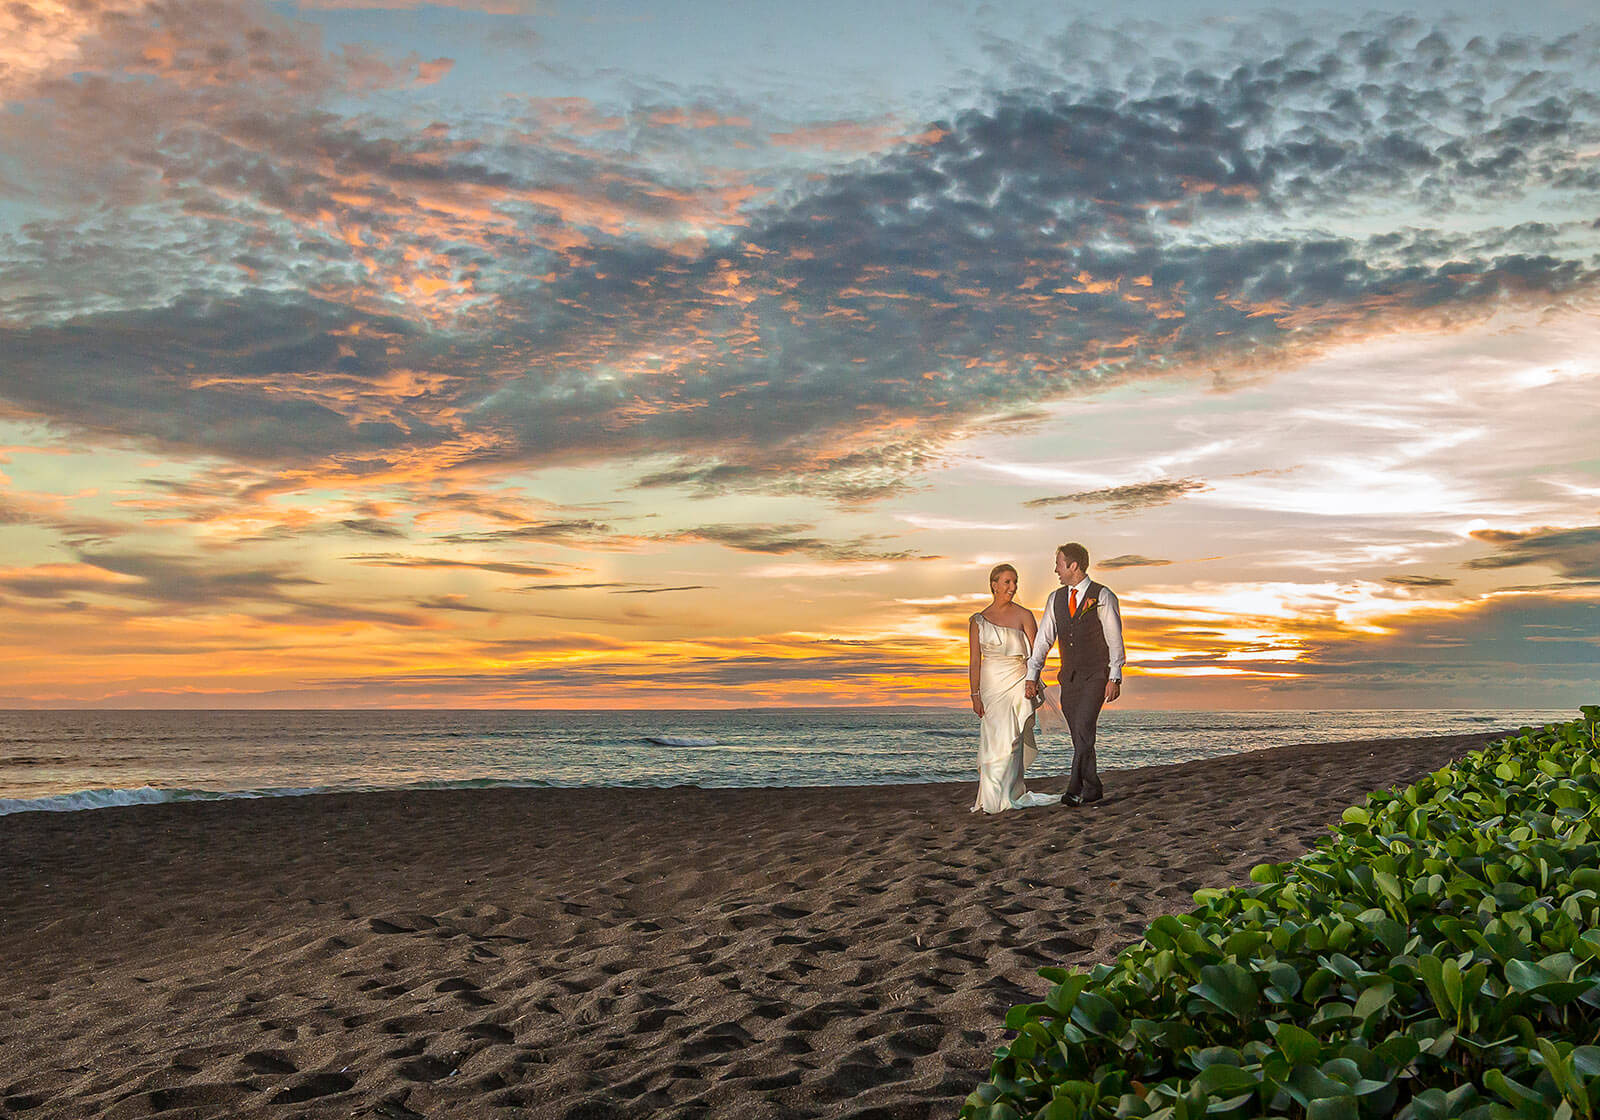 Bali Wedding Photography by Peter Adams-Shawn